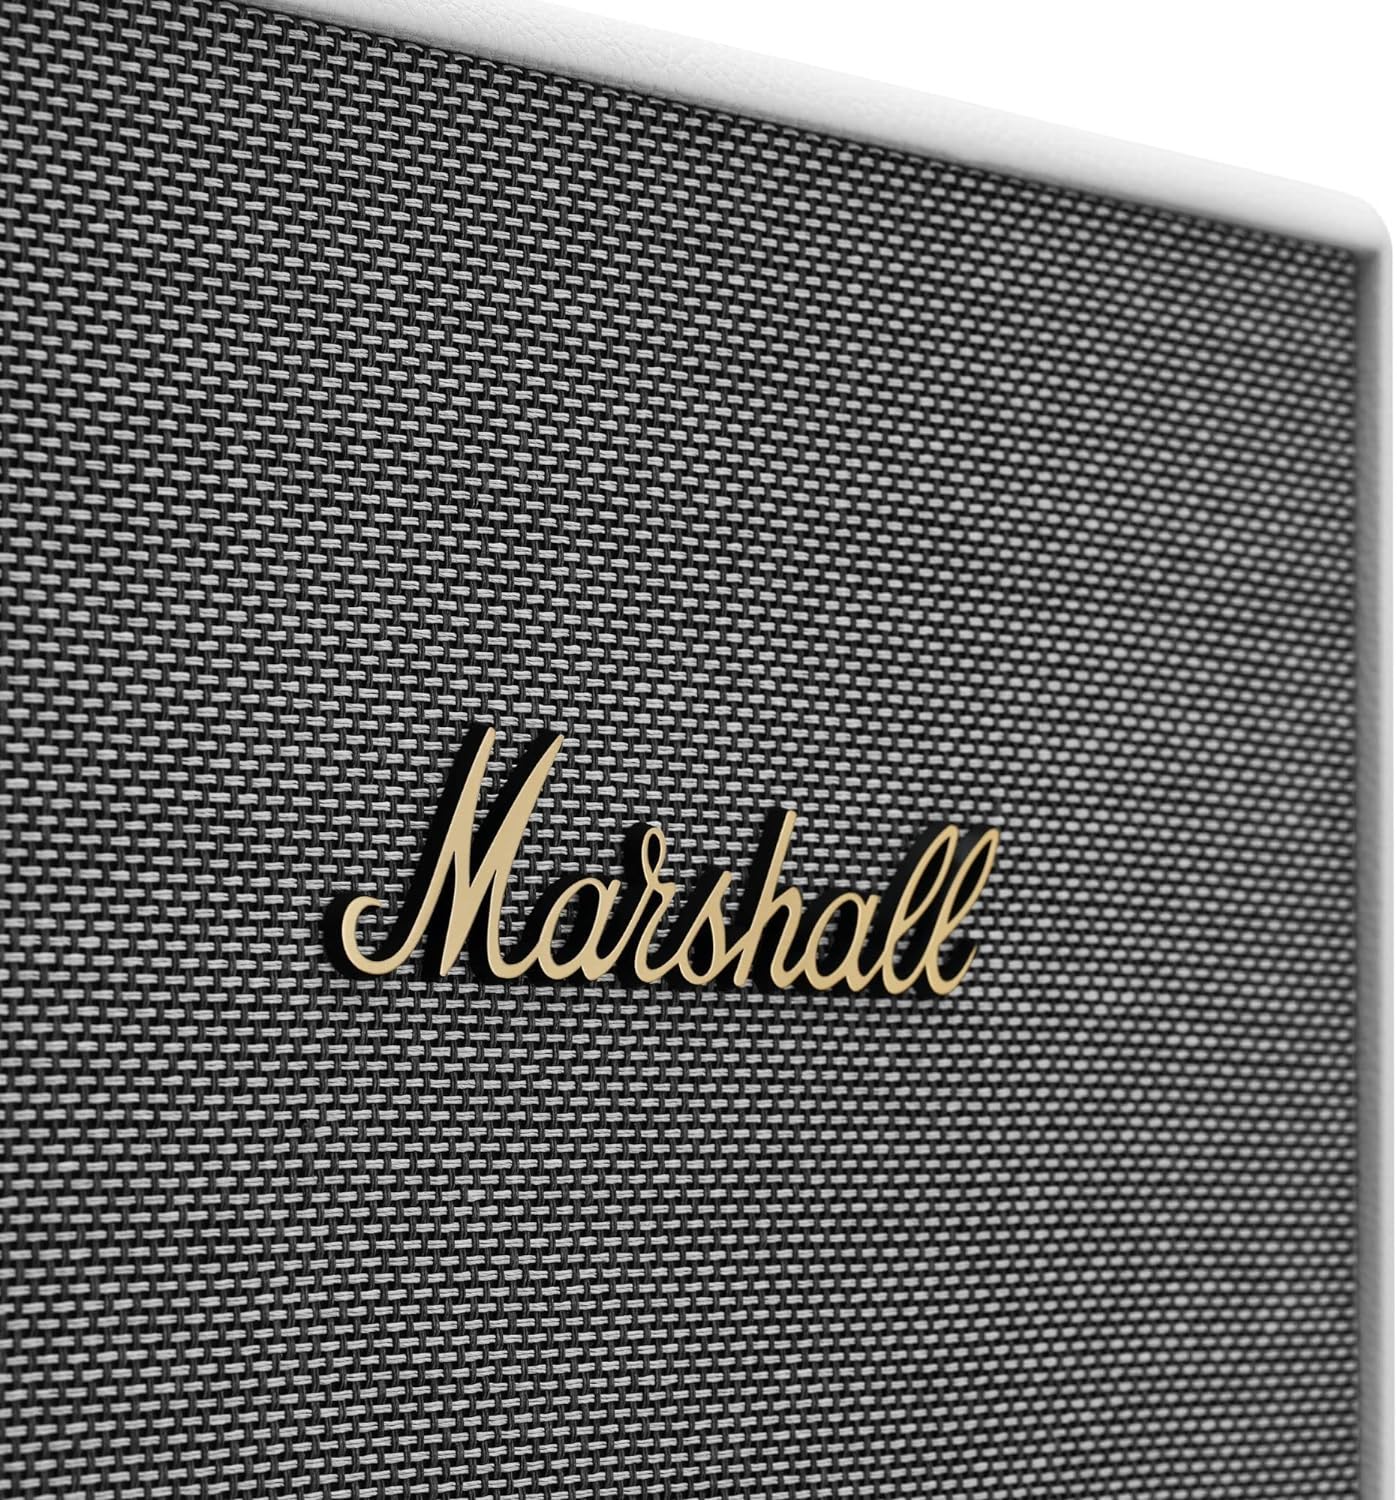 1002491 - Marshall Woburn II Speaker - White - Rich, powerful audio for your enjoyment. 7340055358248